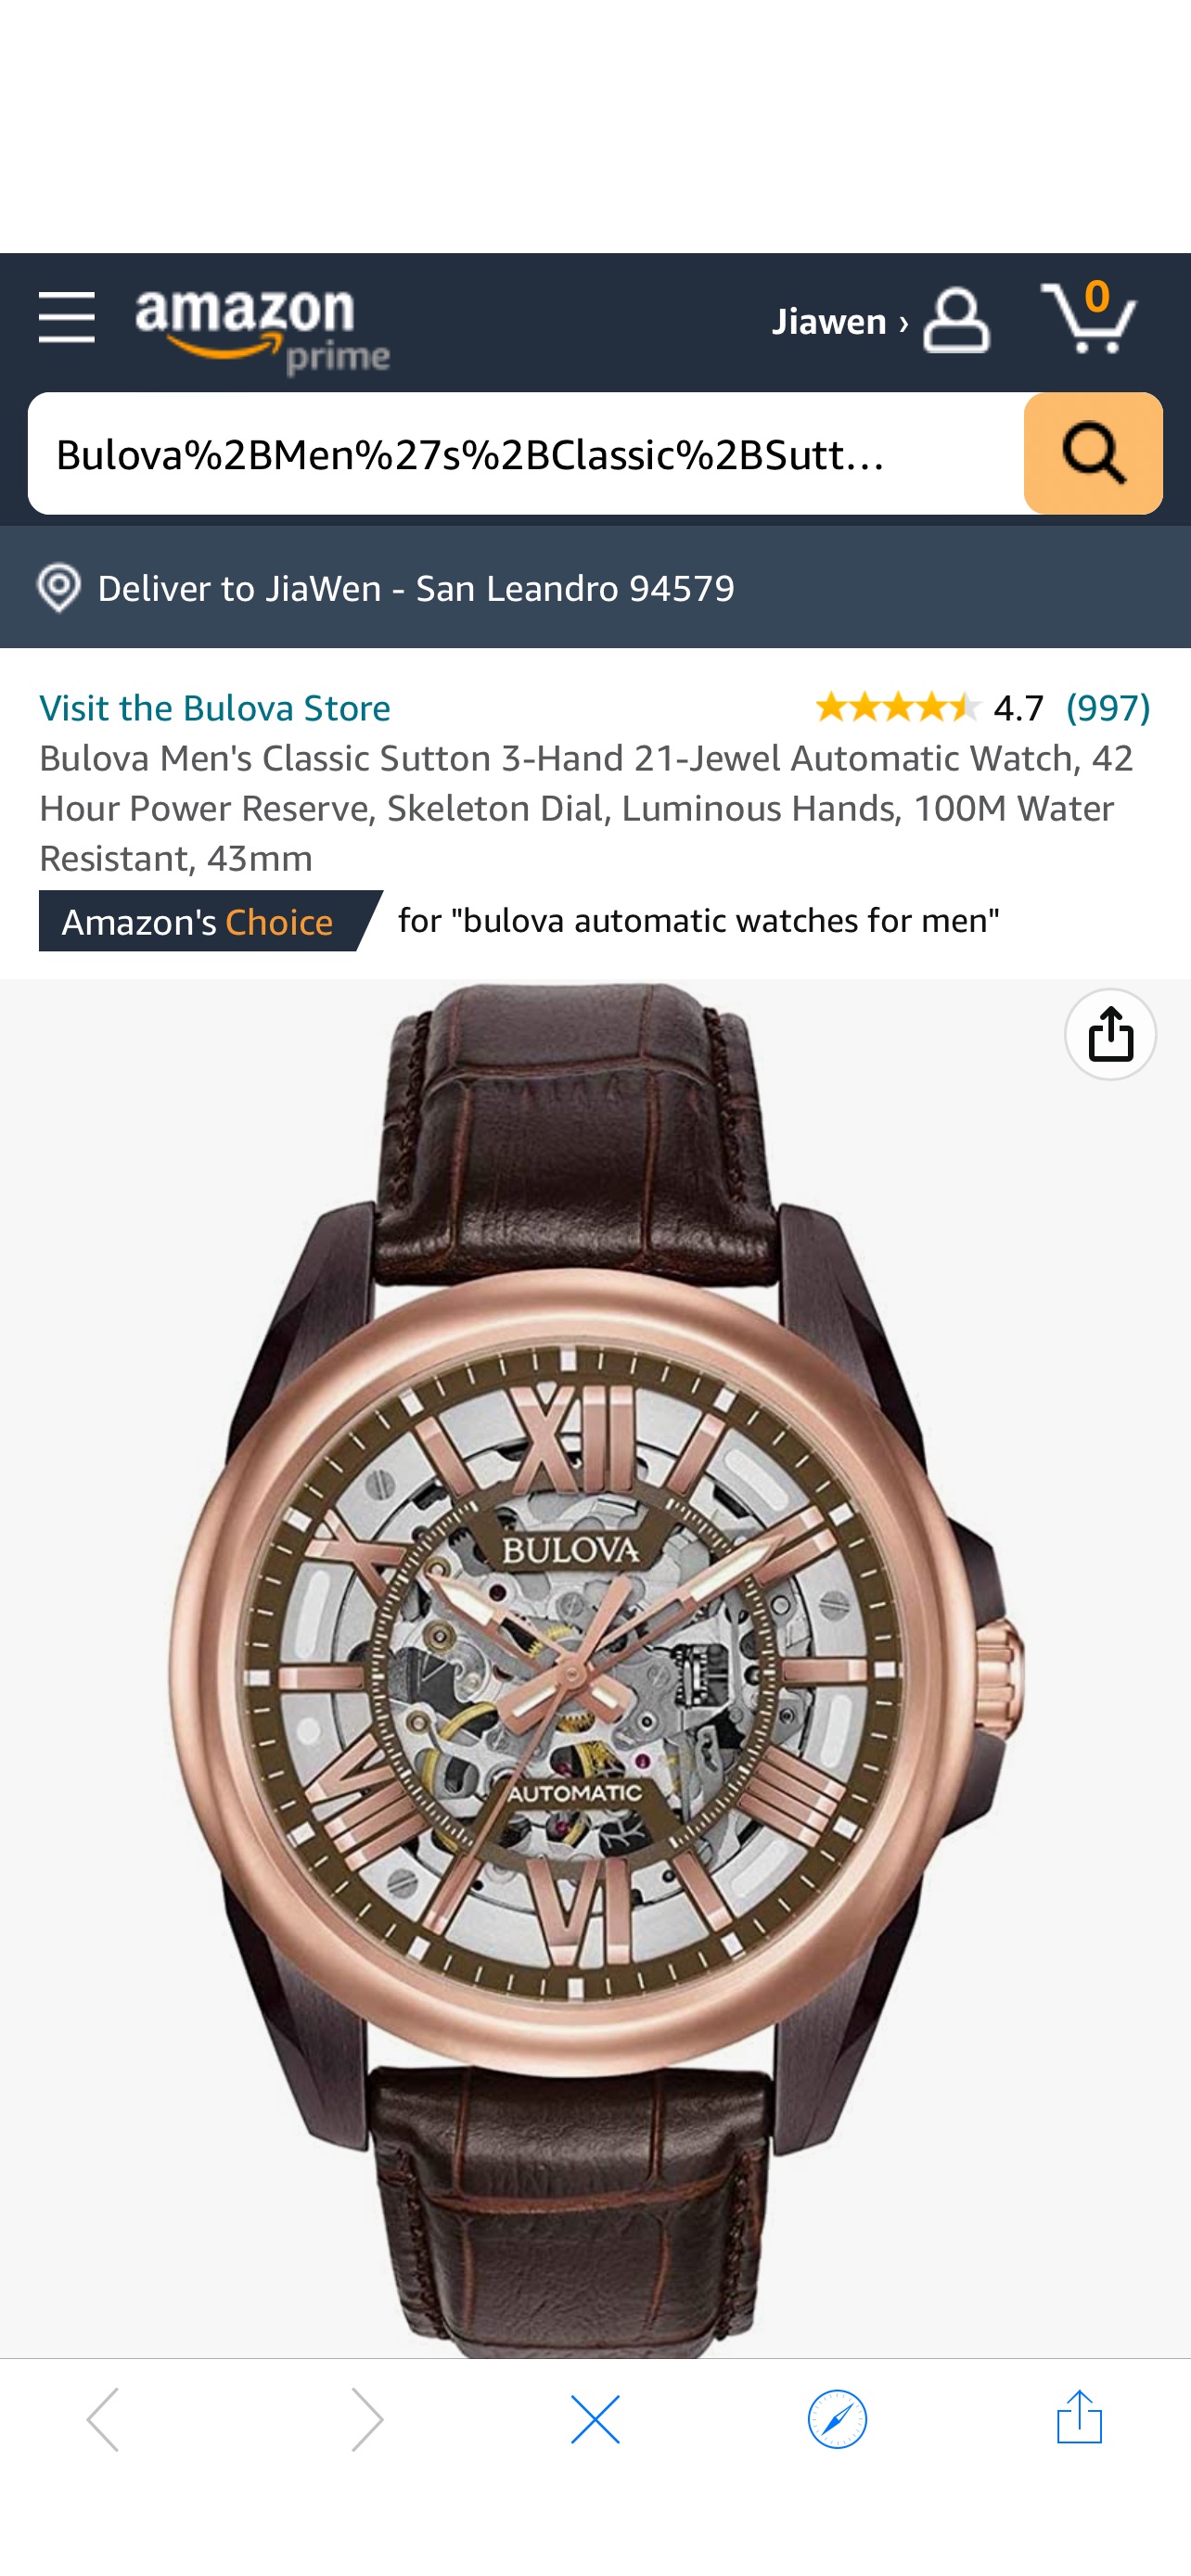 Amazon.com: Bulova Men's Classic Sutton 3-Hand 21-Jewel Automatic Watch, 42 Hour Power Reserve, Skeleton Dial, Luminous Hands, 100M Water Resistant, 43mm